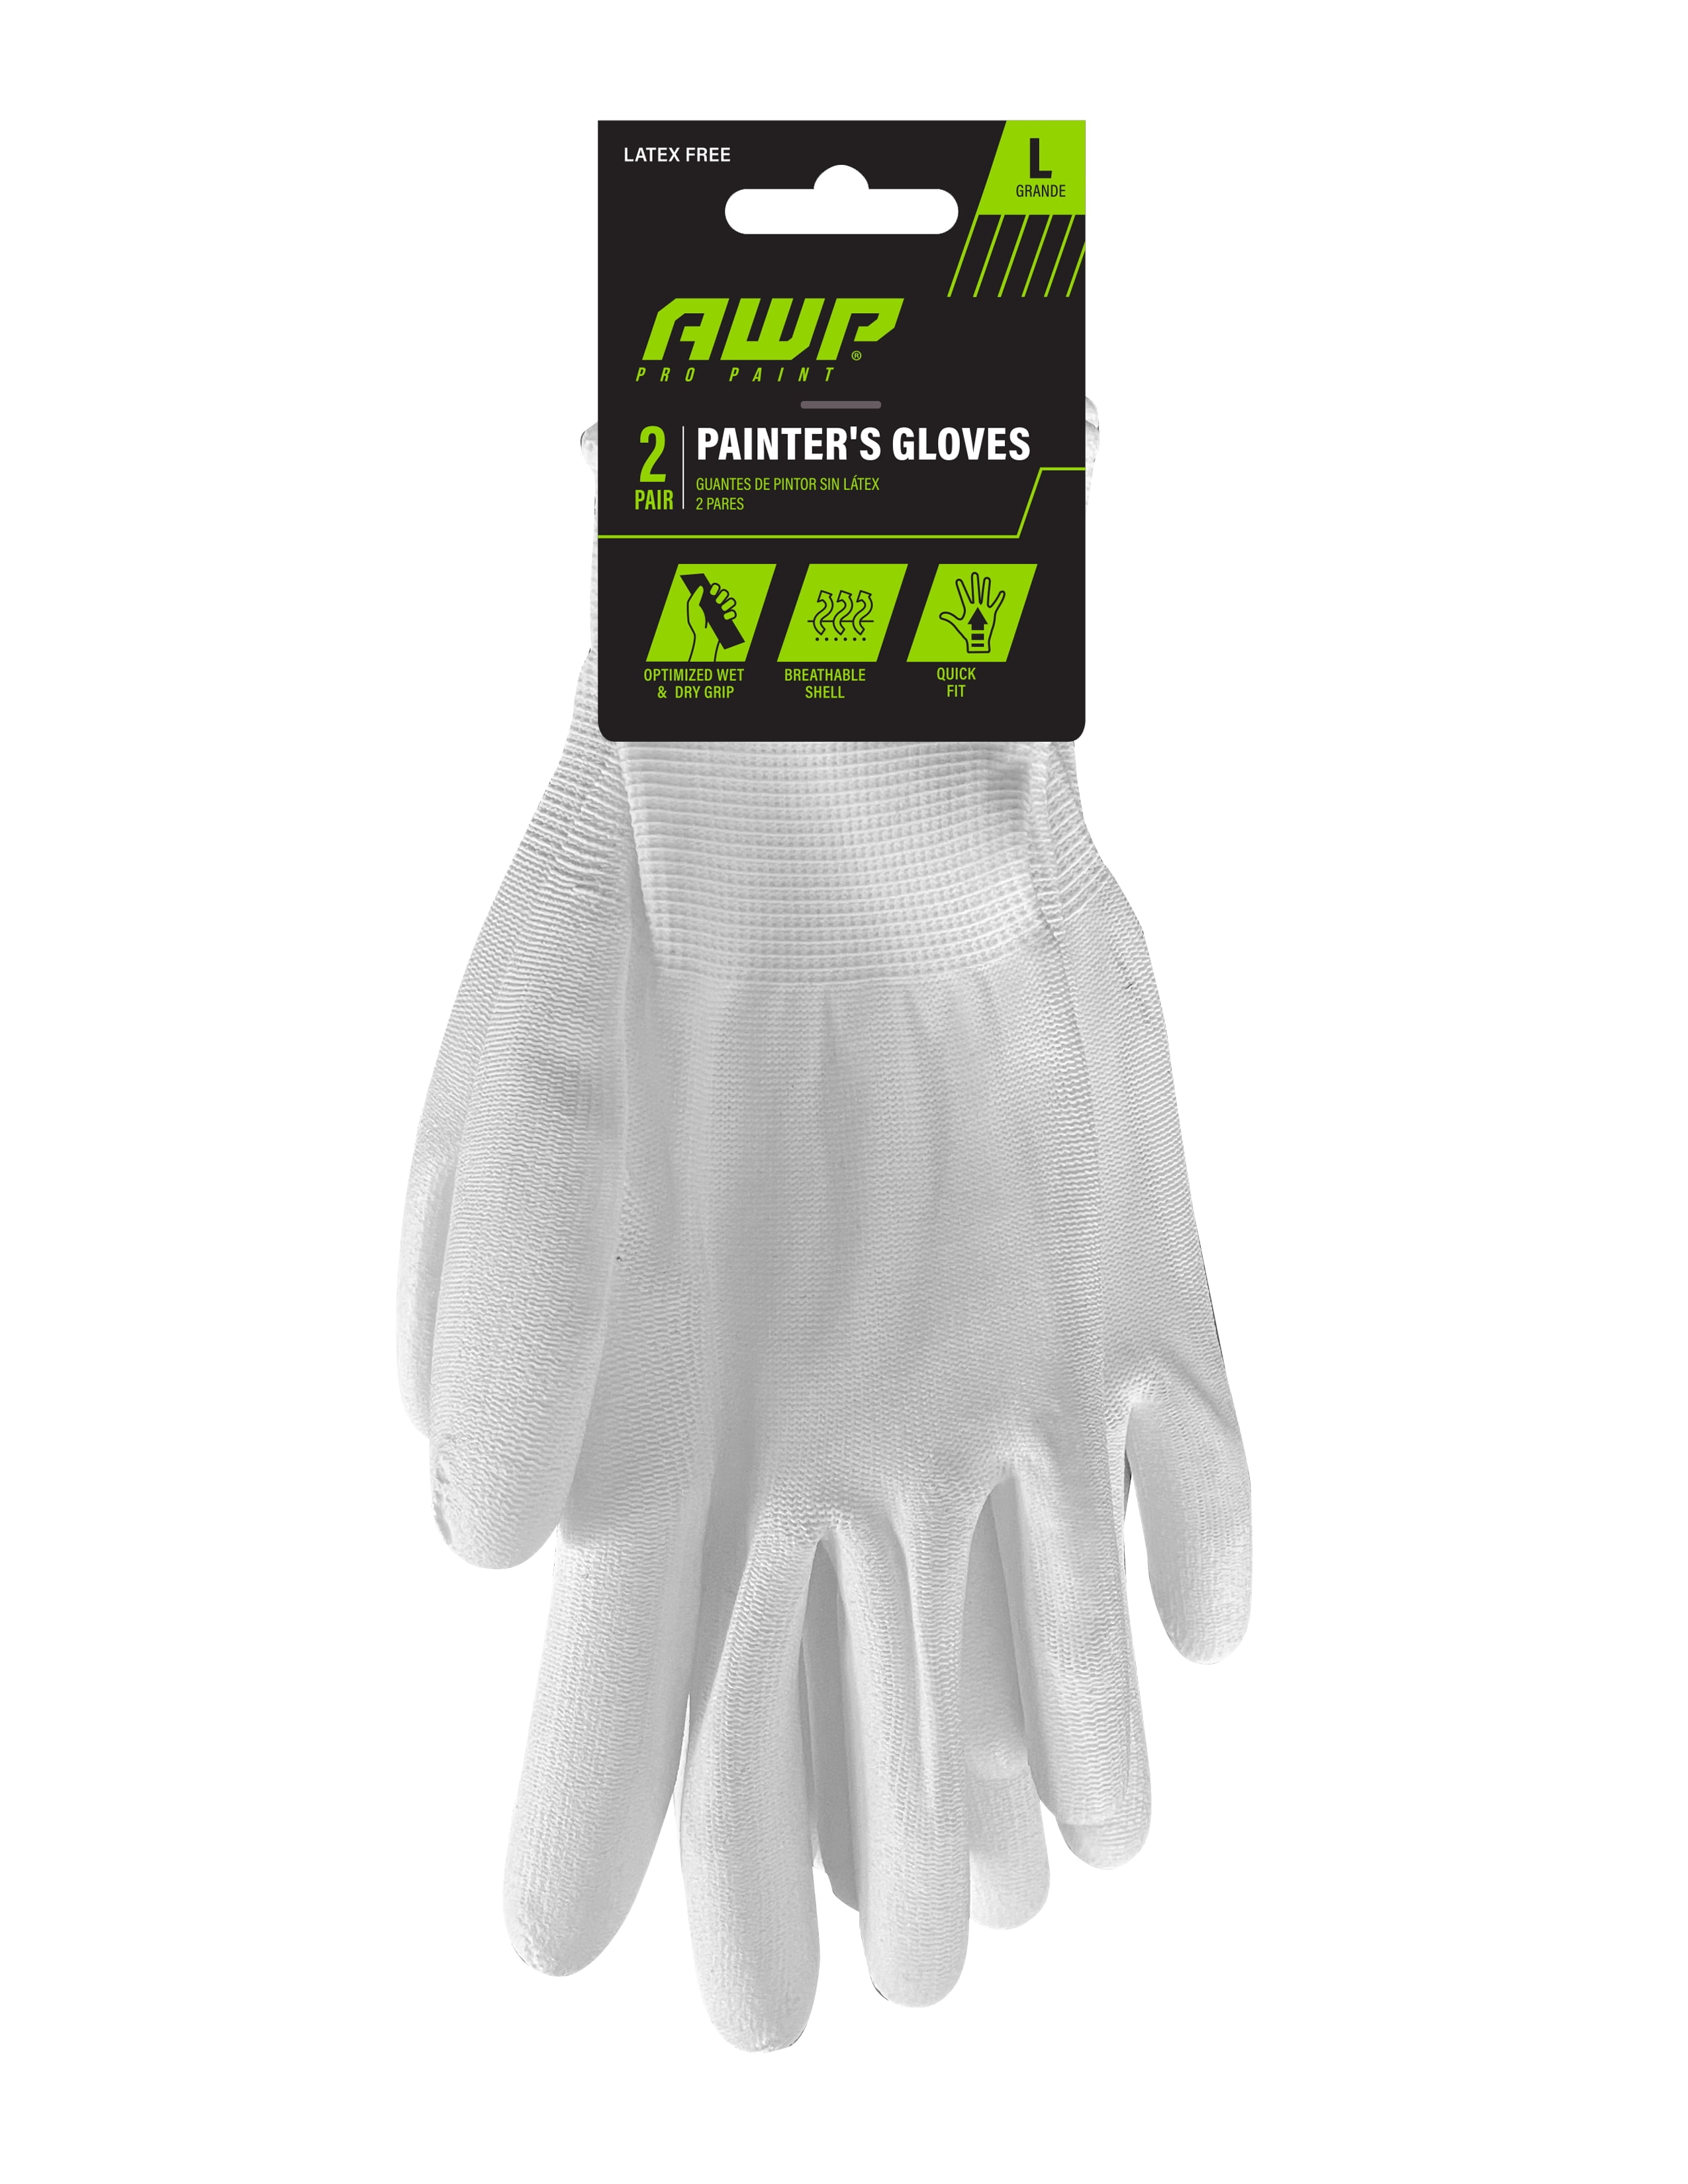 AWP Pro Paint Painter's Work Gloves, Latex Free- Men's Large, White, 2 Pair